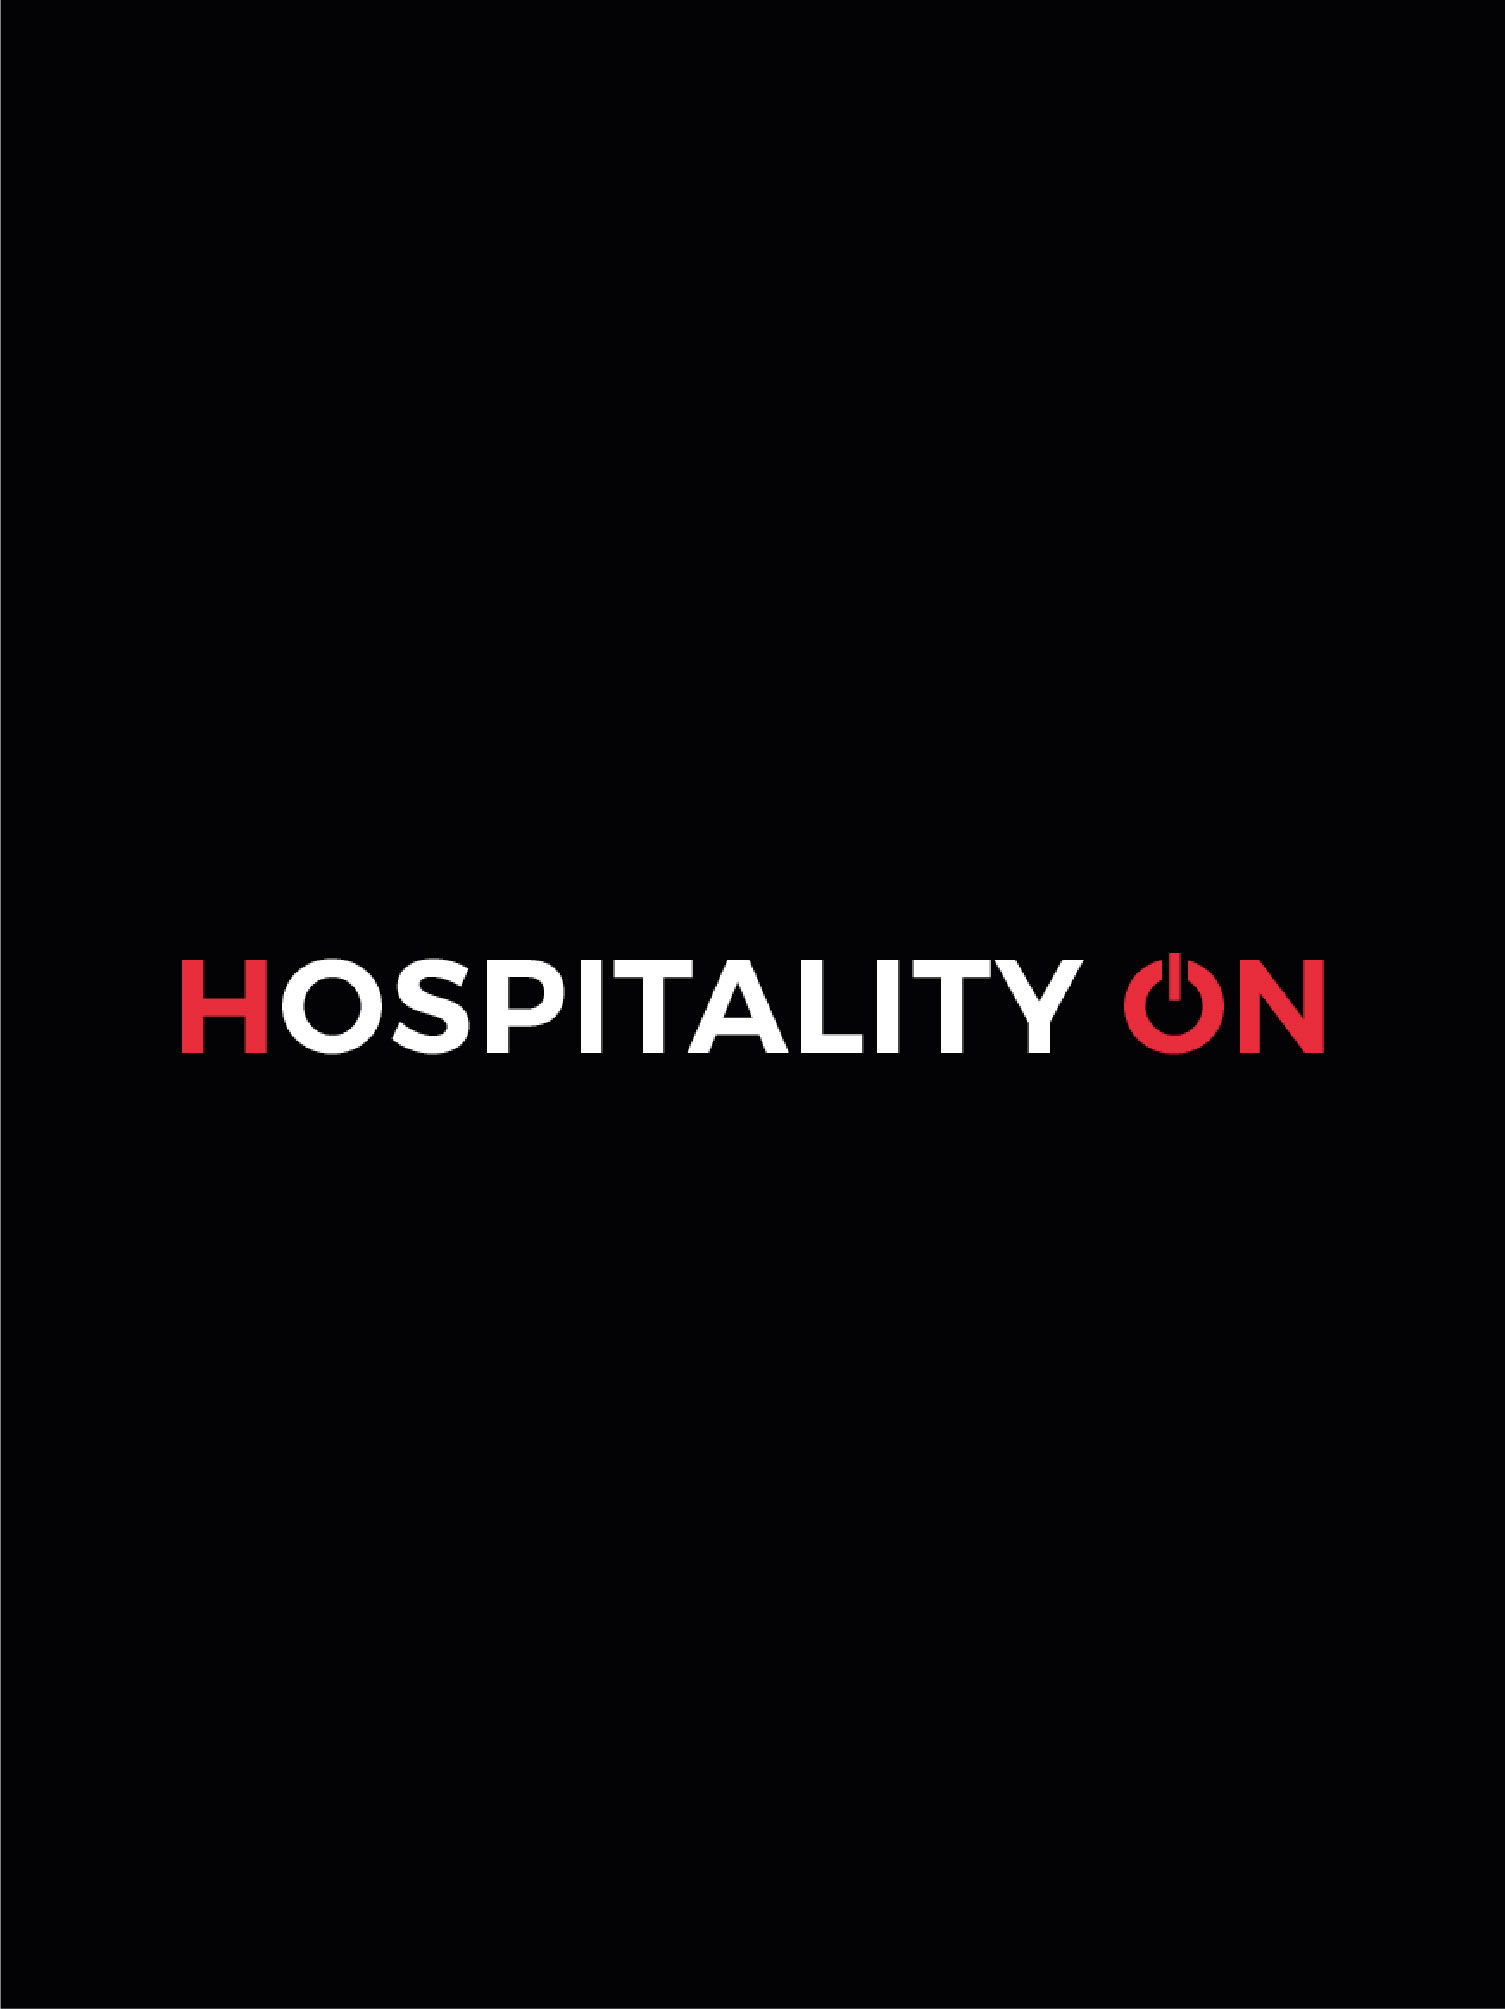 hospitality magazine cover onAccorInvest inaugurates Novotel Paris vaugirard renovated by jean-philippe nuel studio, interior design, luxury hotel, lifestyle hotel, interior design, parisian hotel